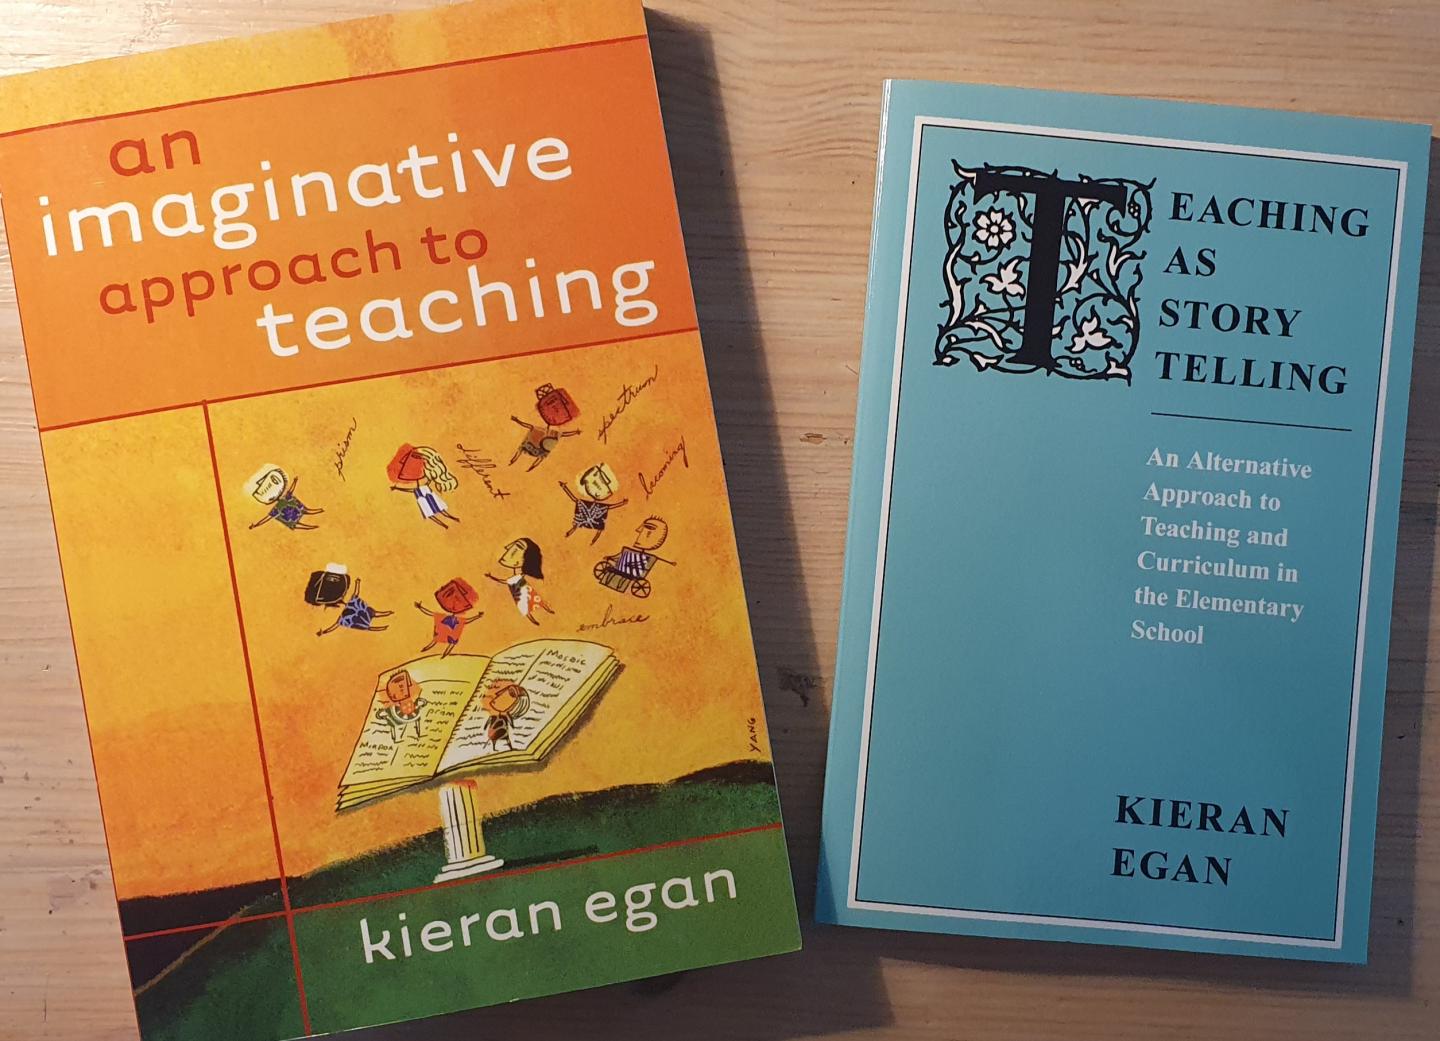 Egan, Kieran - Teaching as storytelling: an alternative approach to teaching and curriculum in the elementary school / An imaginative approach to teaching